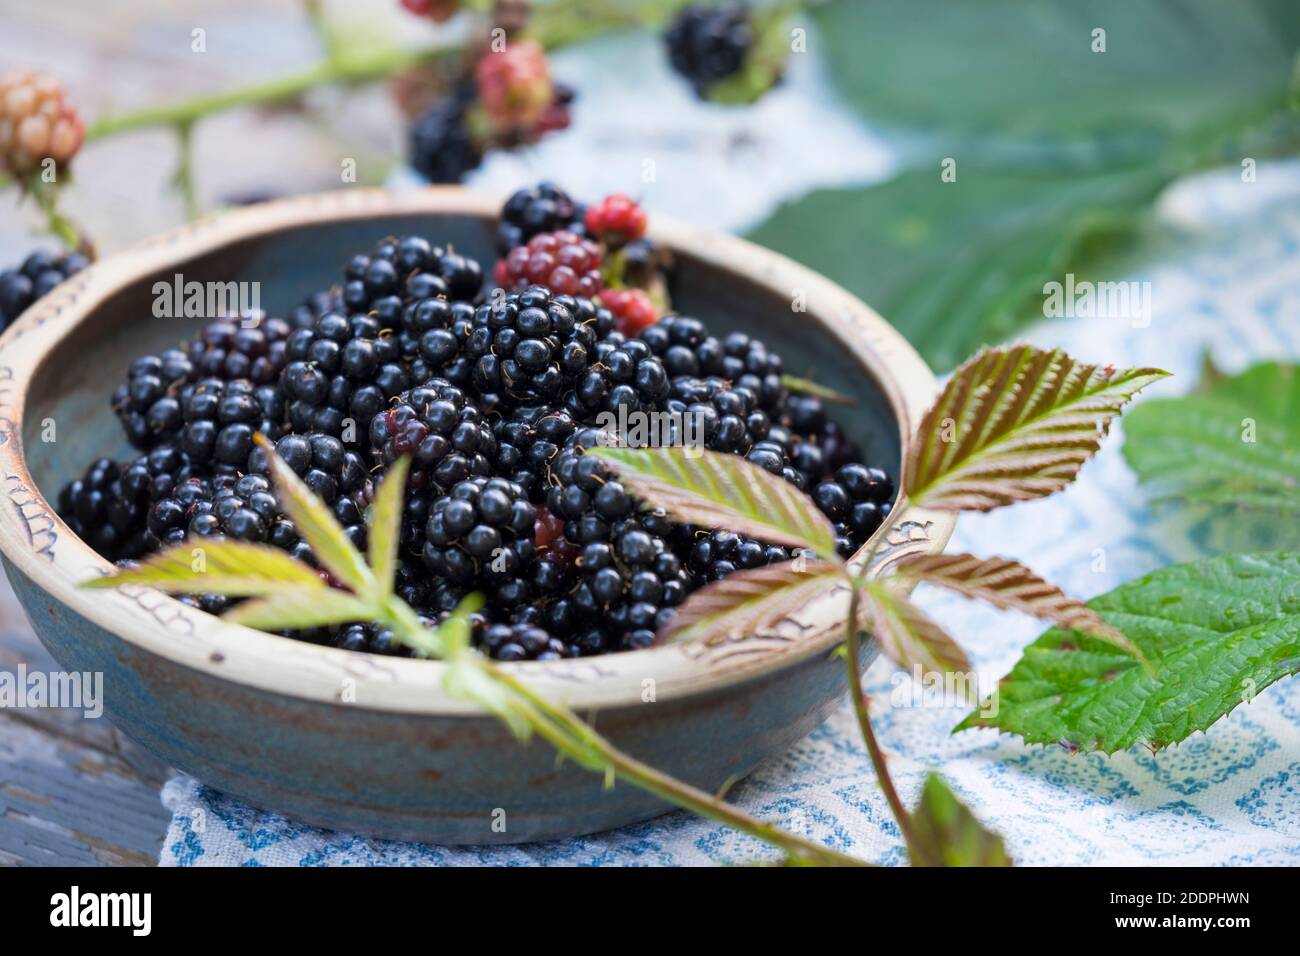 shrubby blackberry (Rubus fruticosus), collected blackberries, Germany Stock Photo